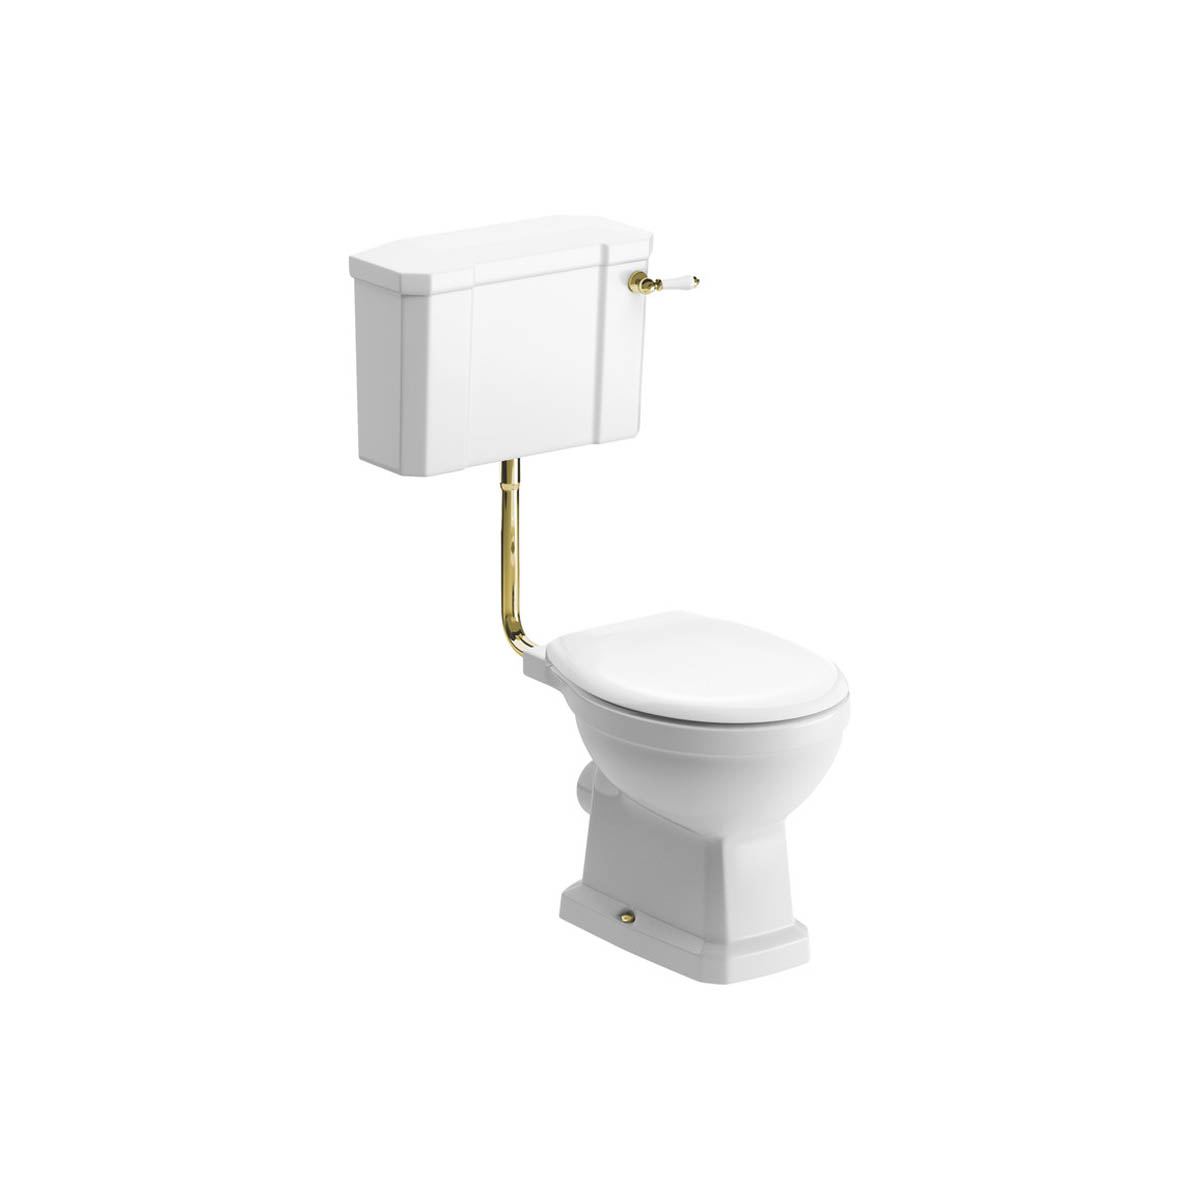 Ari Design London Low Level WC w/Brushed Brass Finish & Soft Close Seat